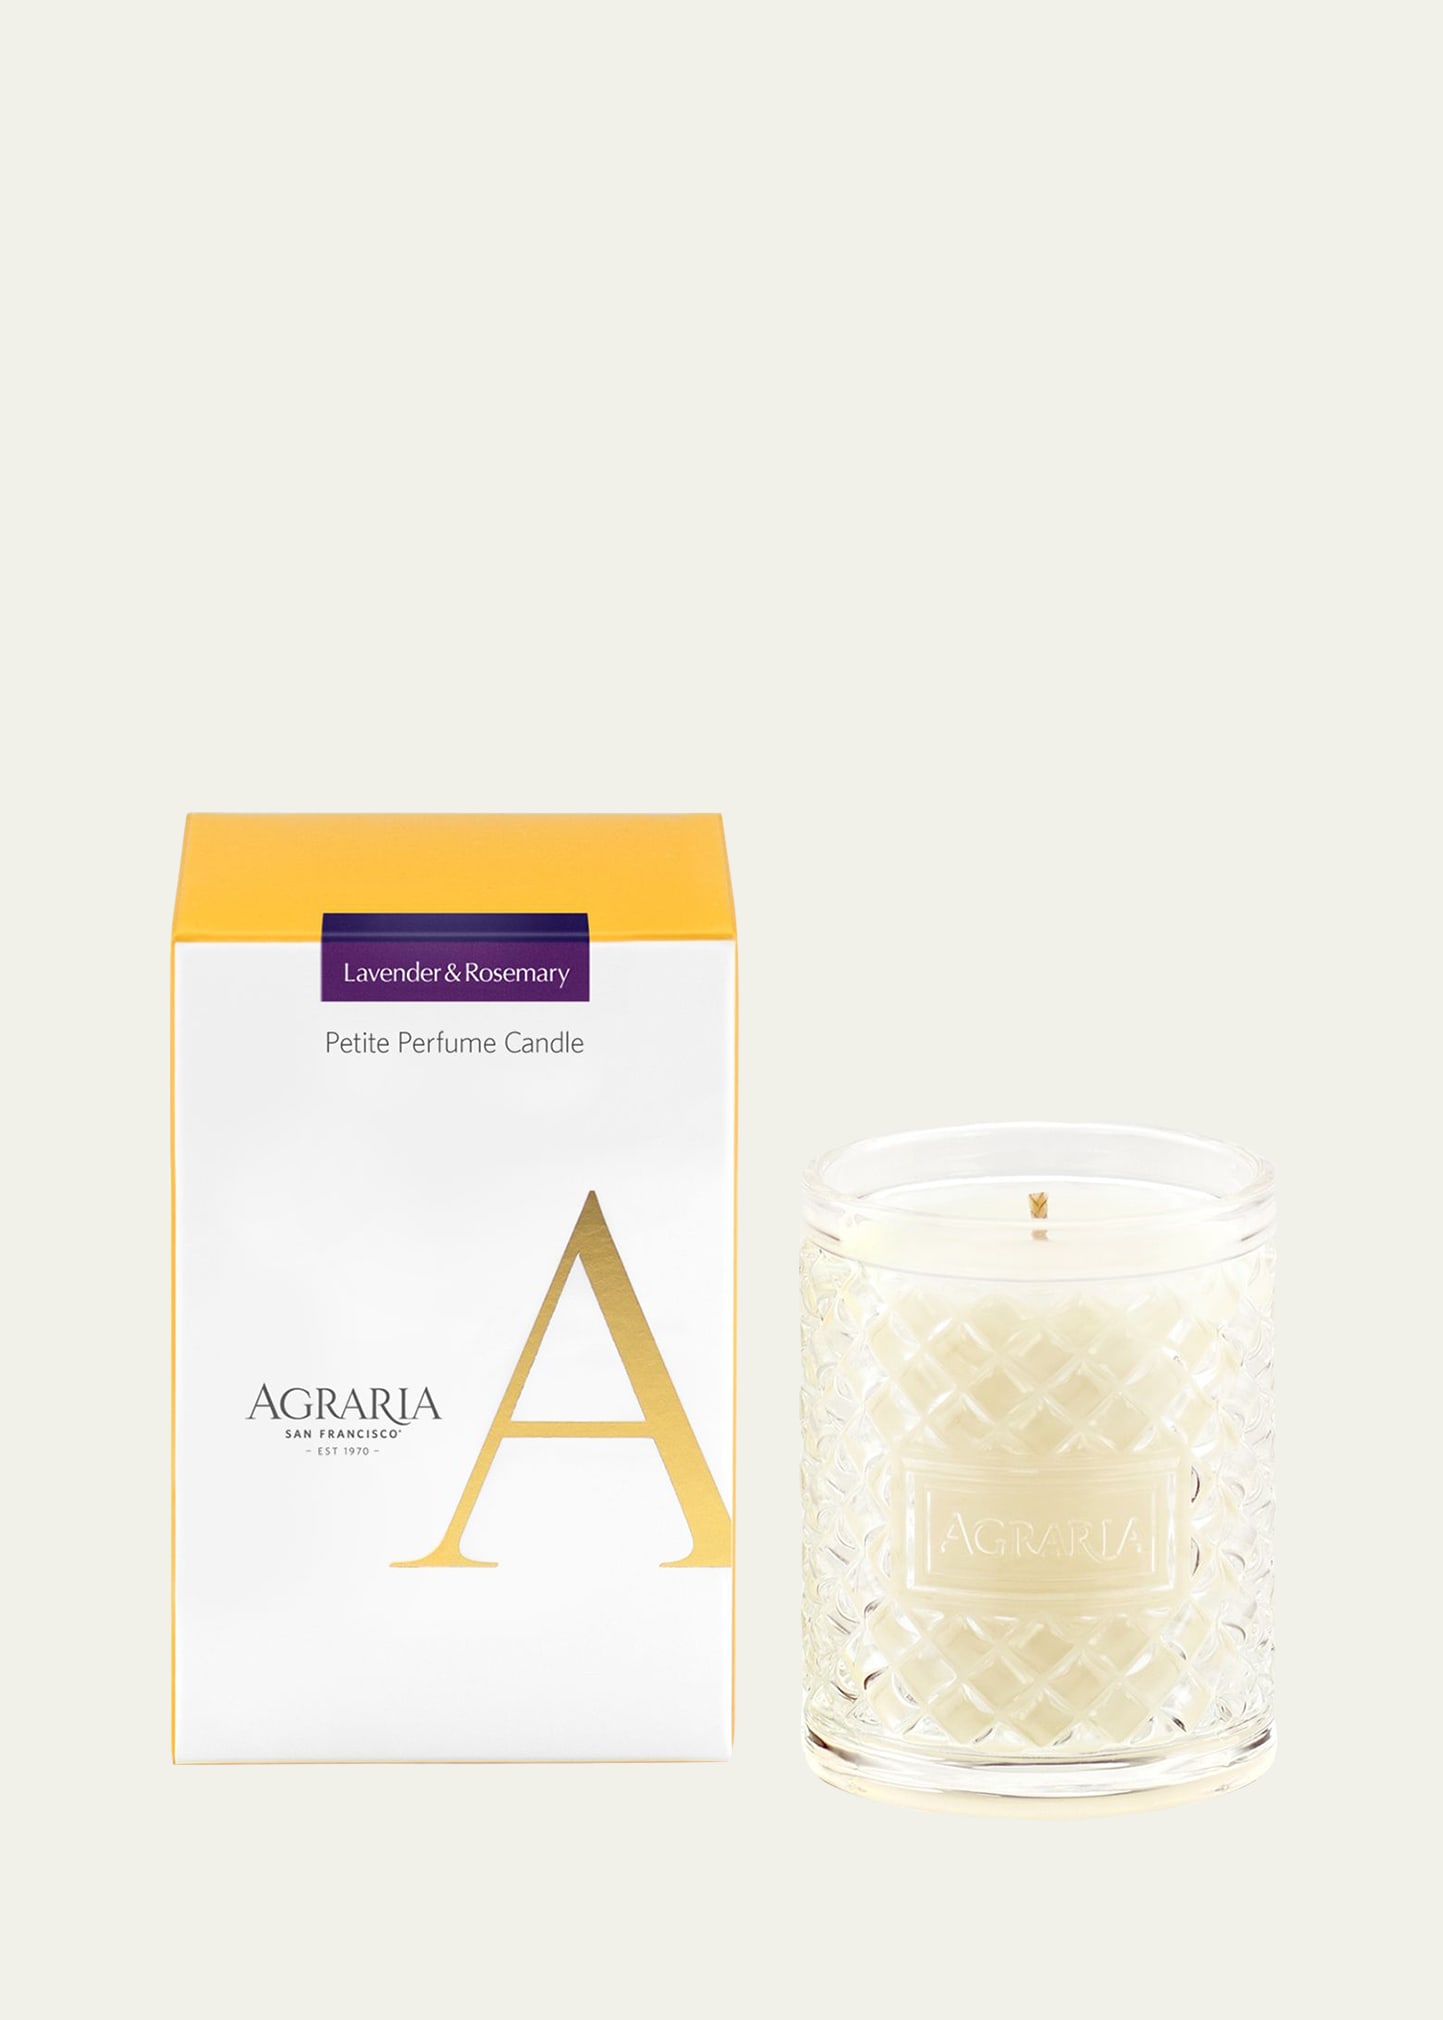 Agraria 3.4 oz. Lavender & Rosemary Petite Perfume Candle